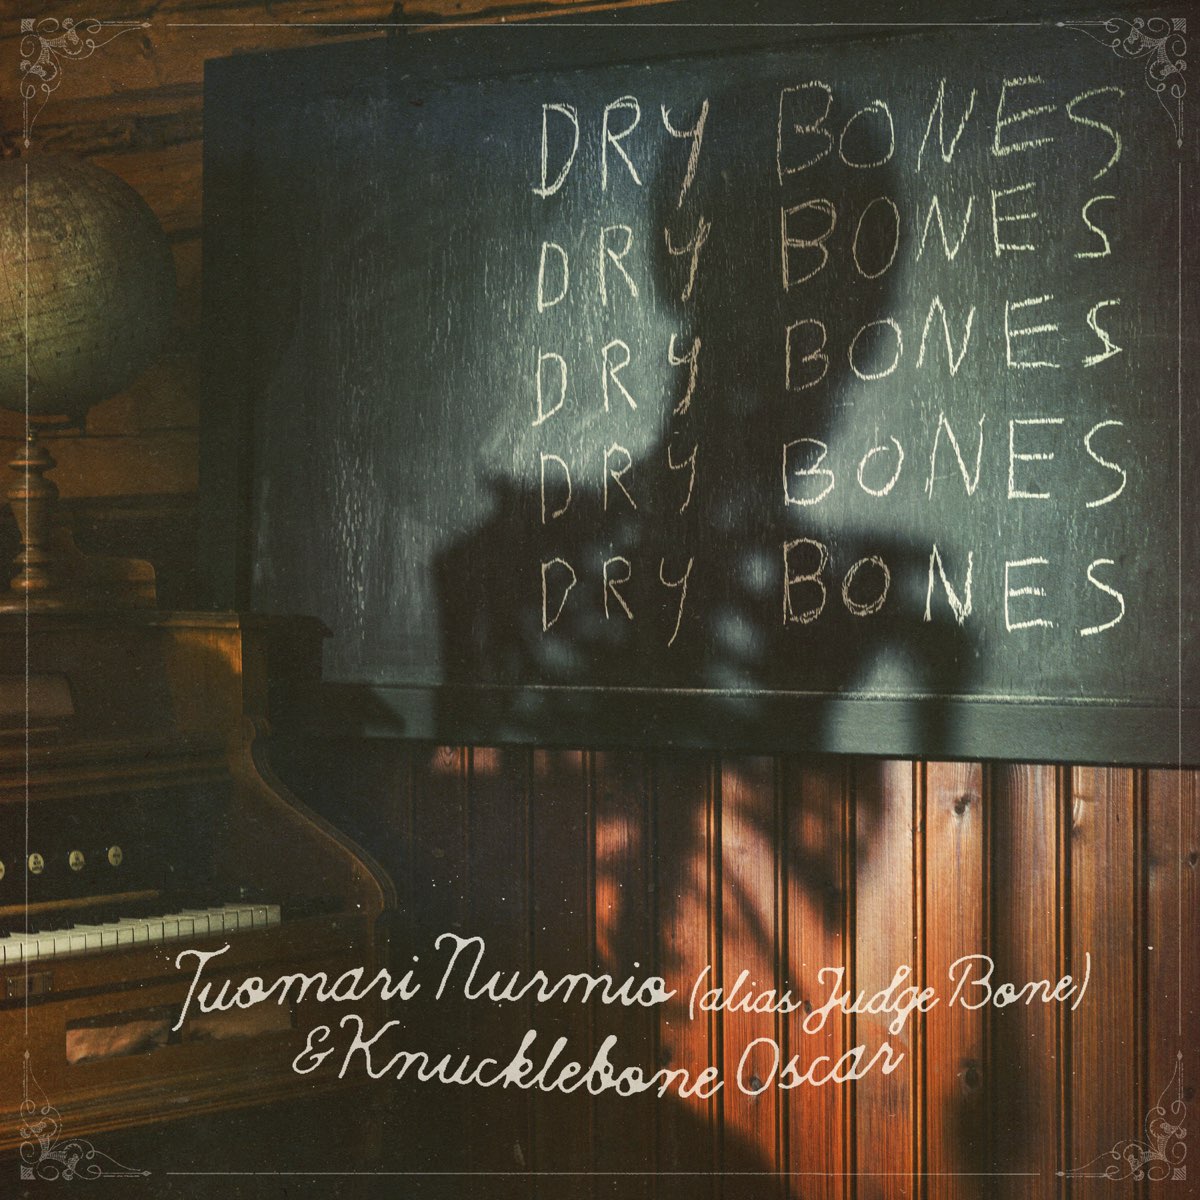 Dry Bones - Single by Tuomari Nurmio & Knucklebone Oscar on Apple Music